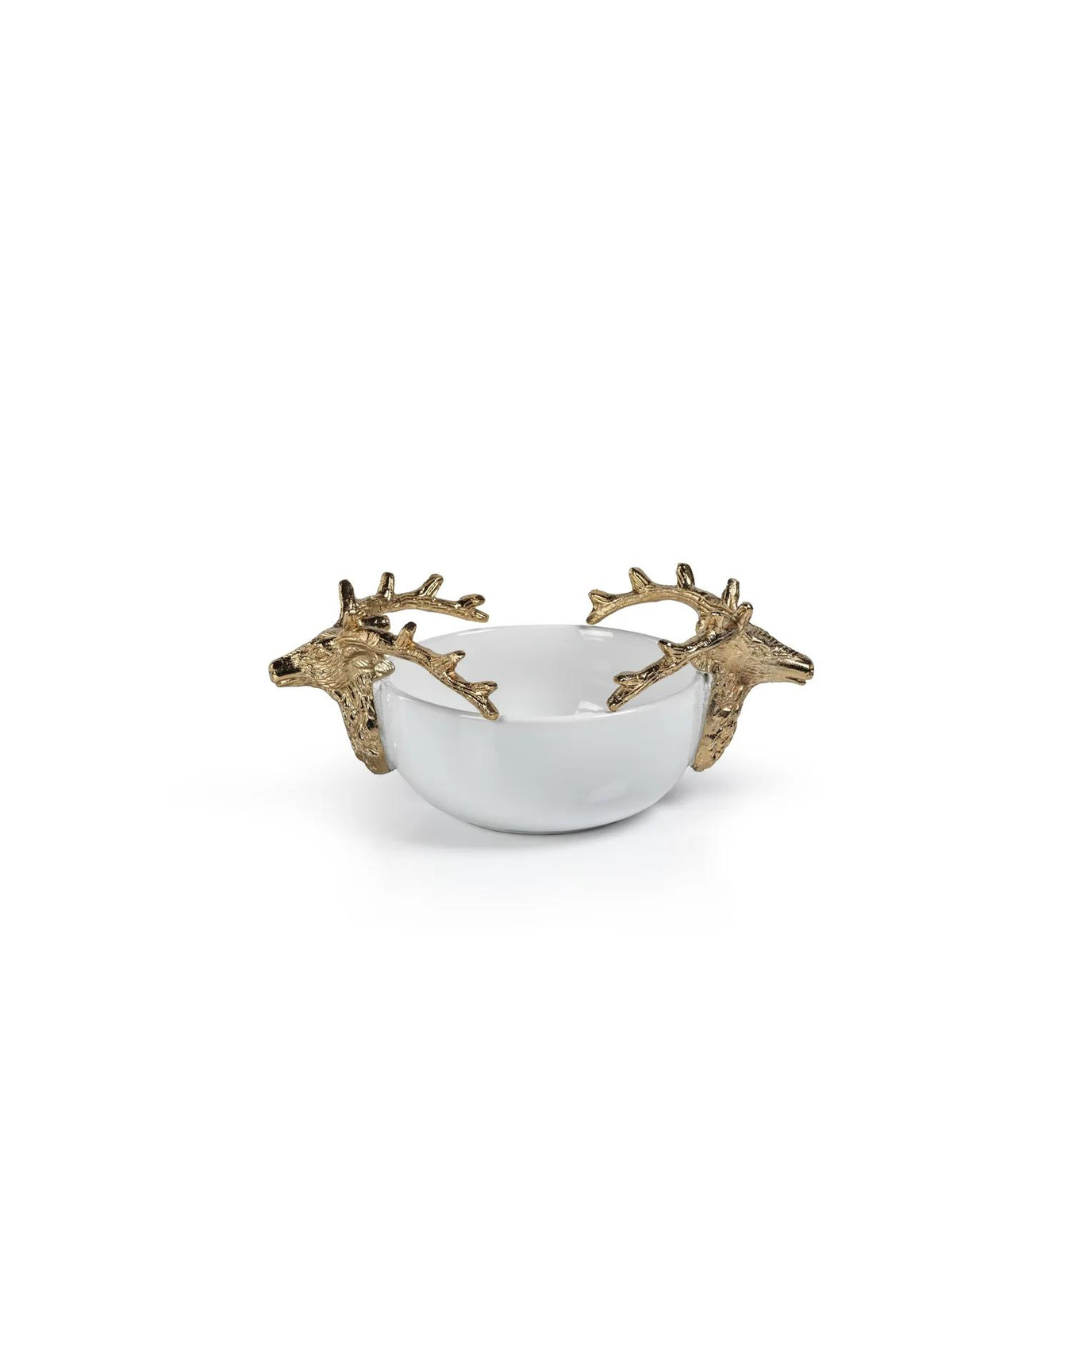 Aspen Ceramic Bowl with Gold Stag Head Design - Small